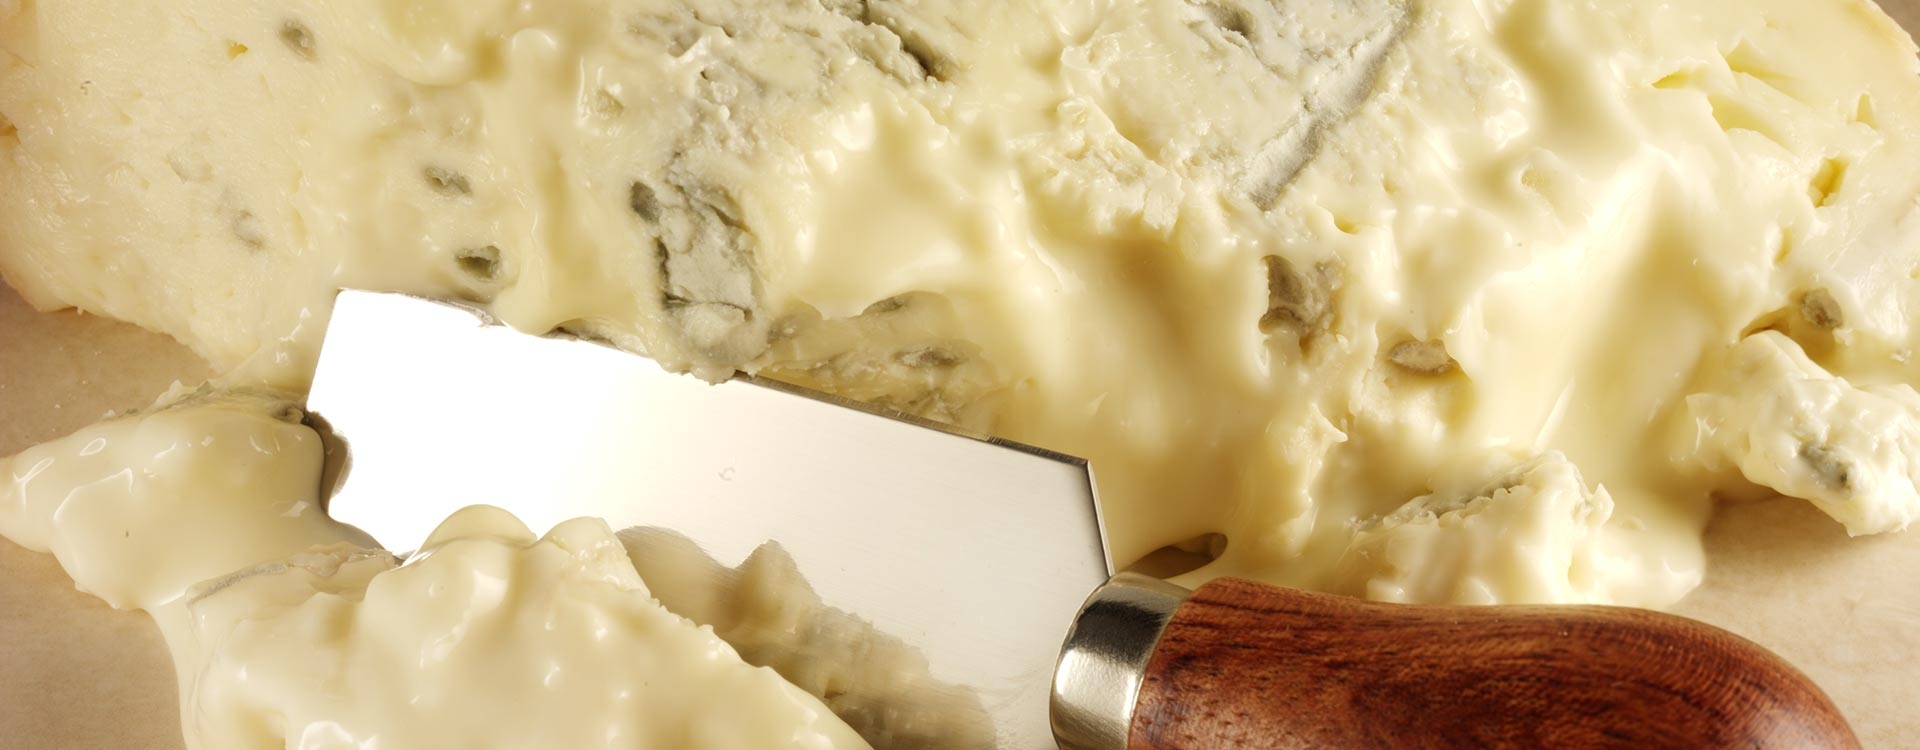 Italian uncooked cheeses